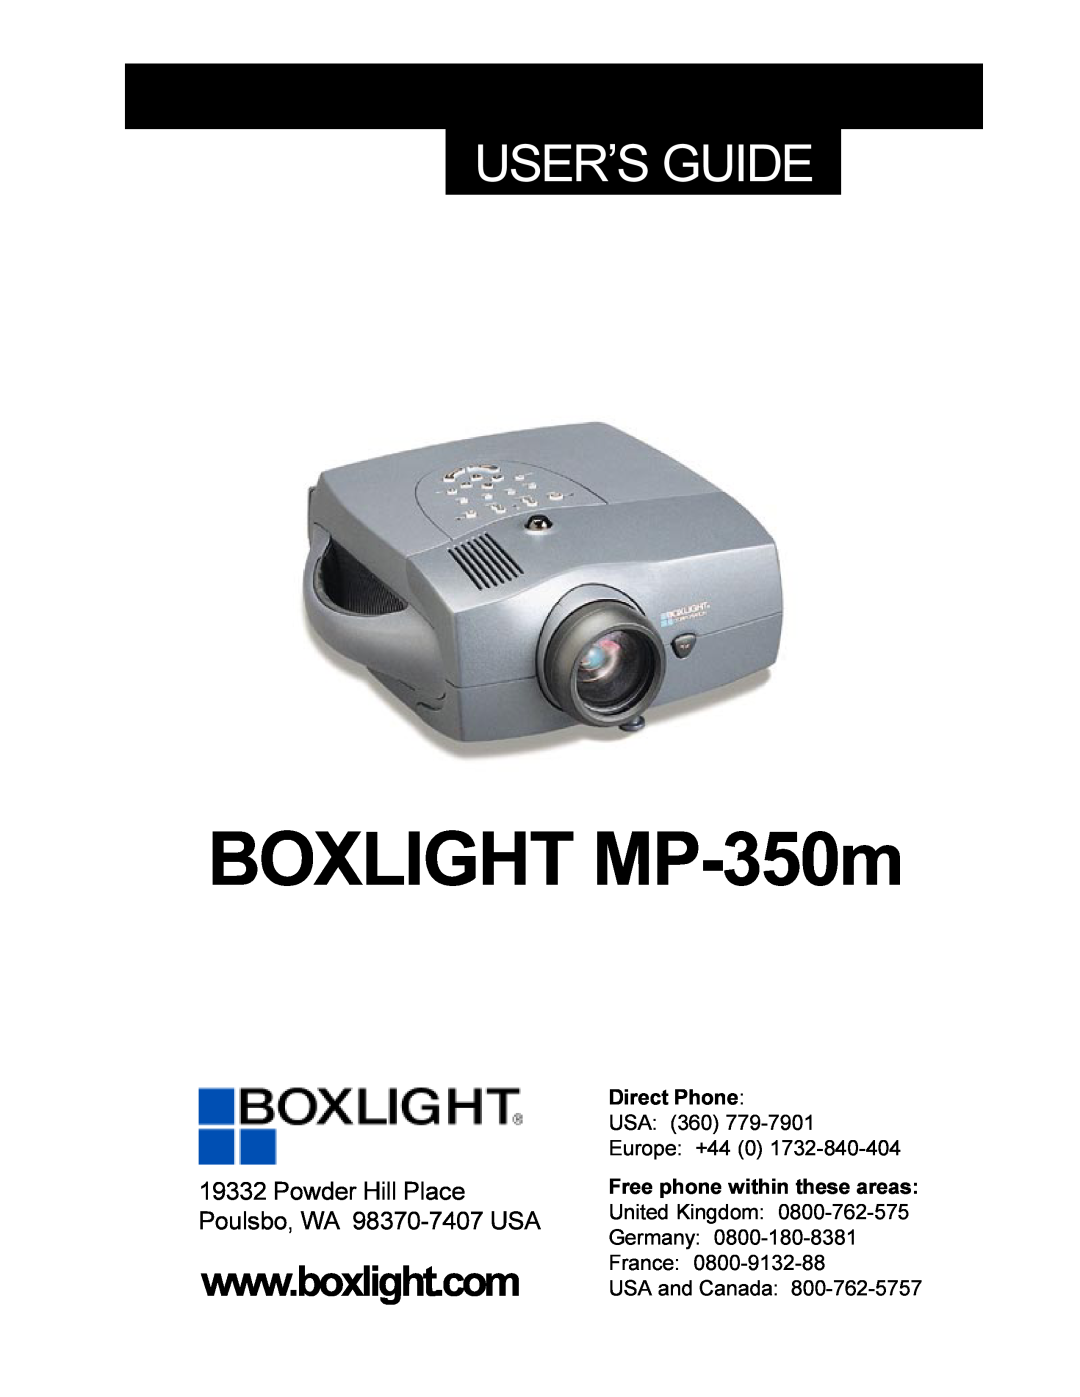 BOXLIGHT manual BOXLIGHT MP-350m, User’S Guide, Powder Hill Place Poulsbo, WA 98370-7407 USA, Direct Phone 